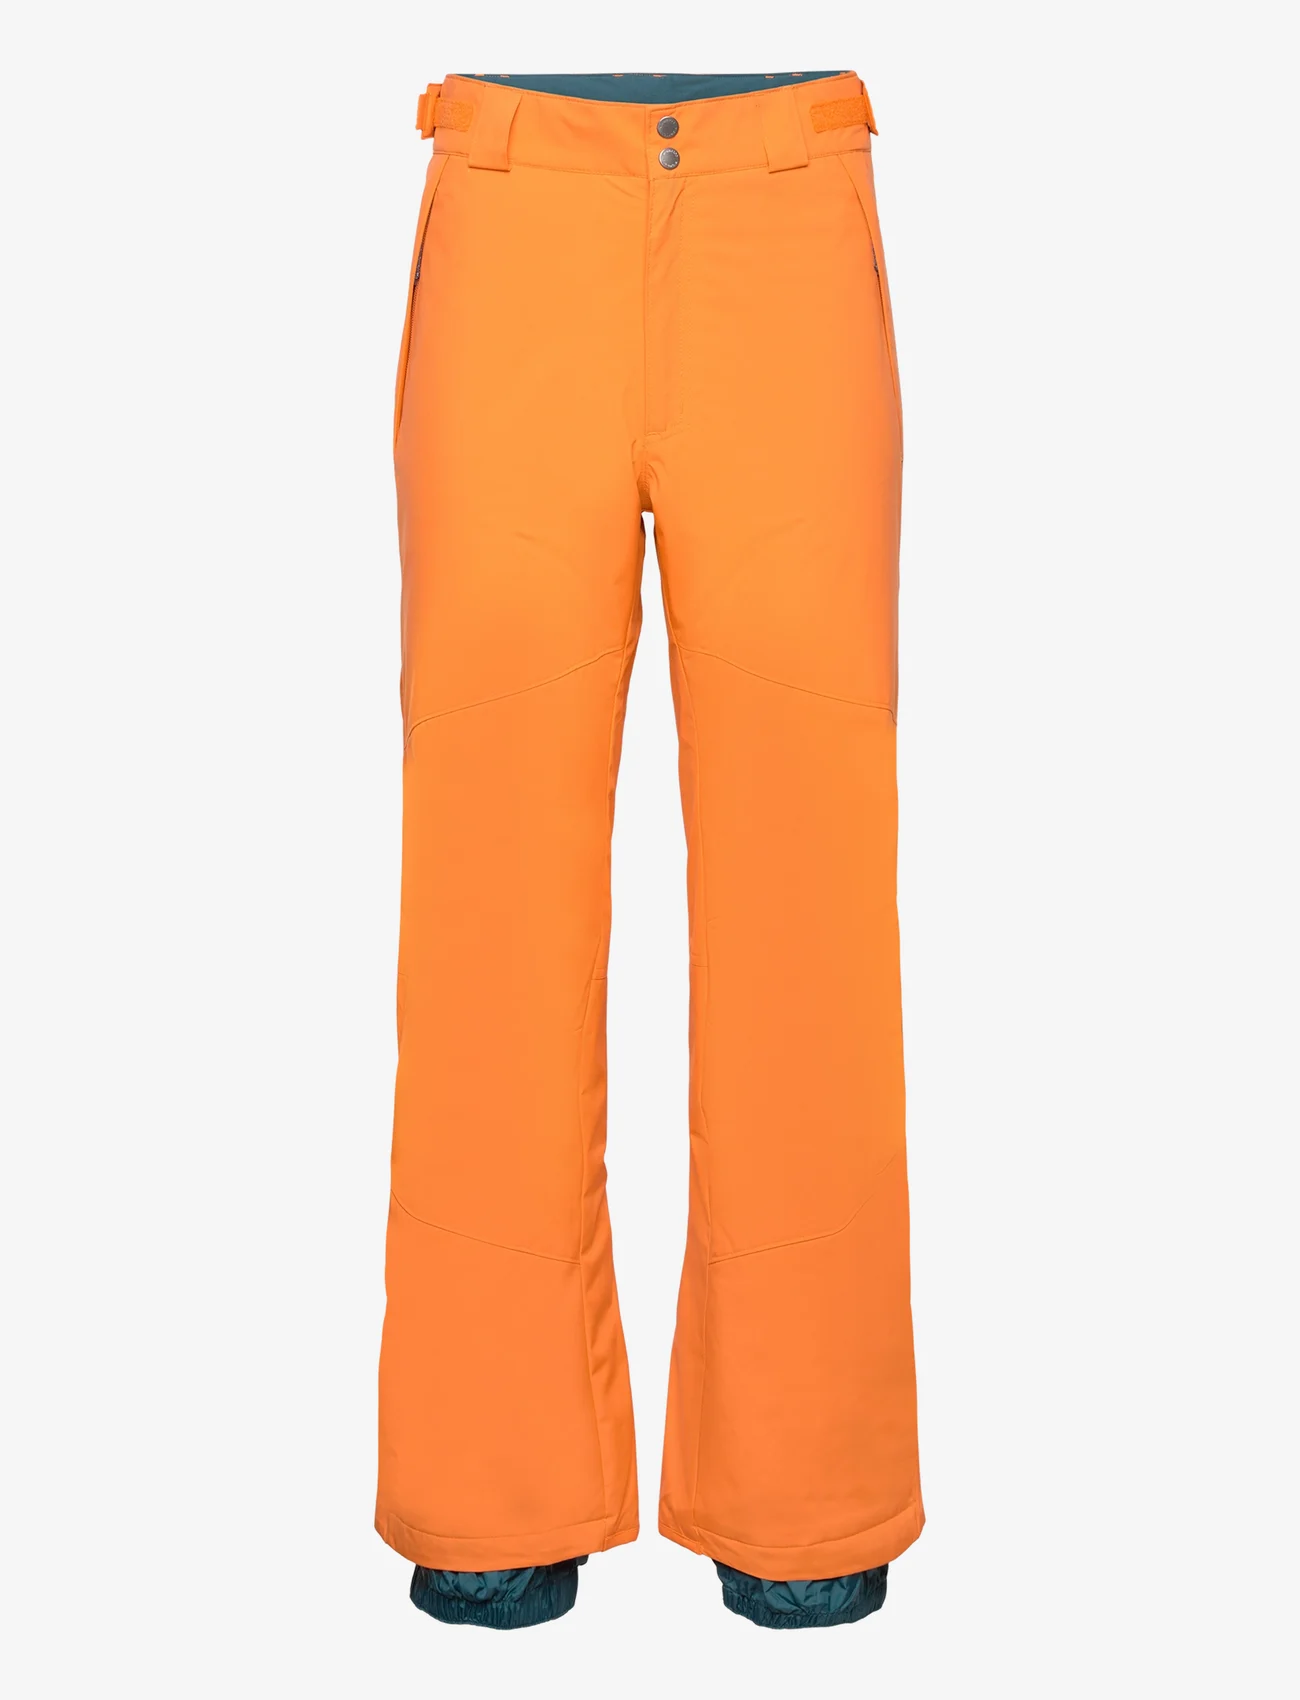 Columbia Sportswear - Shafer Canyon Pant - slidinėjimo kelnės - bright orange - 0